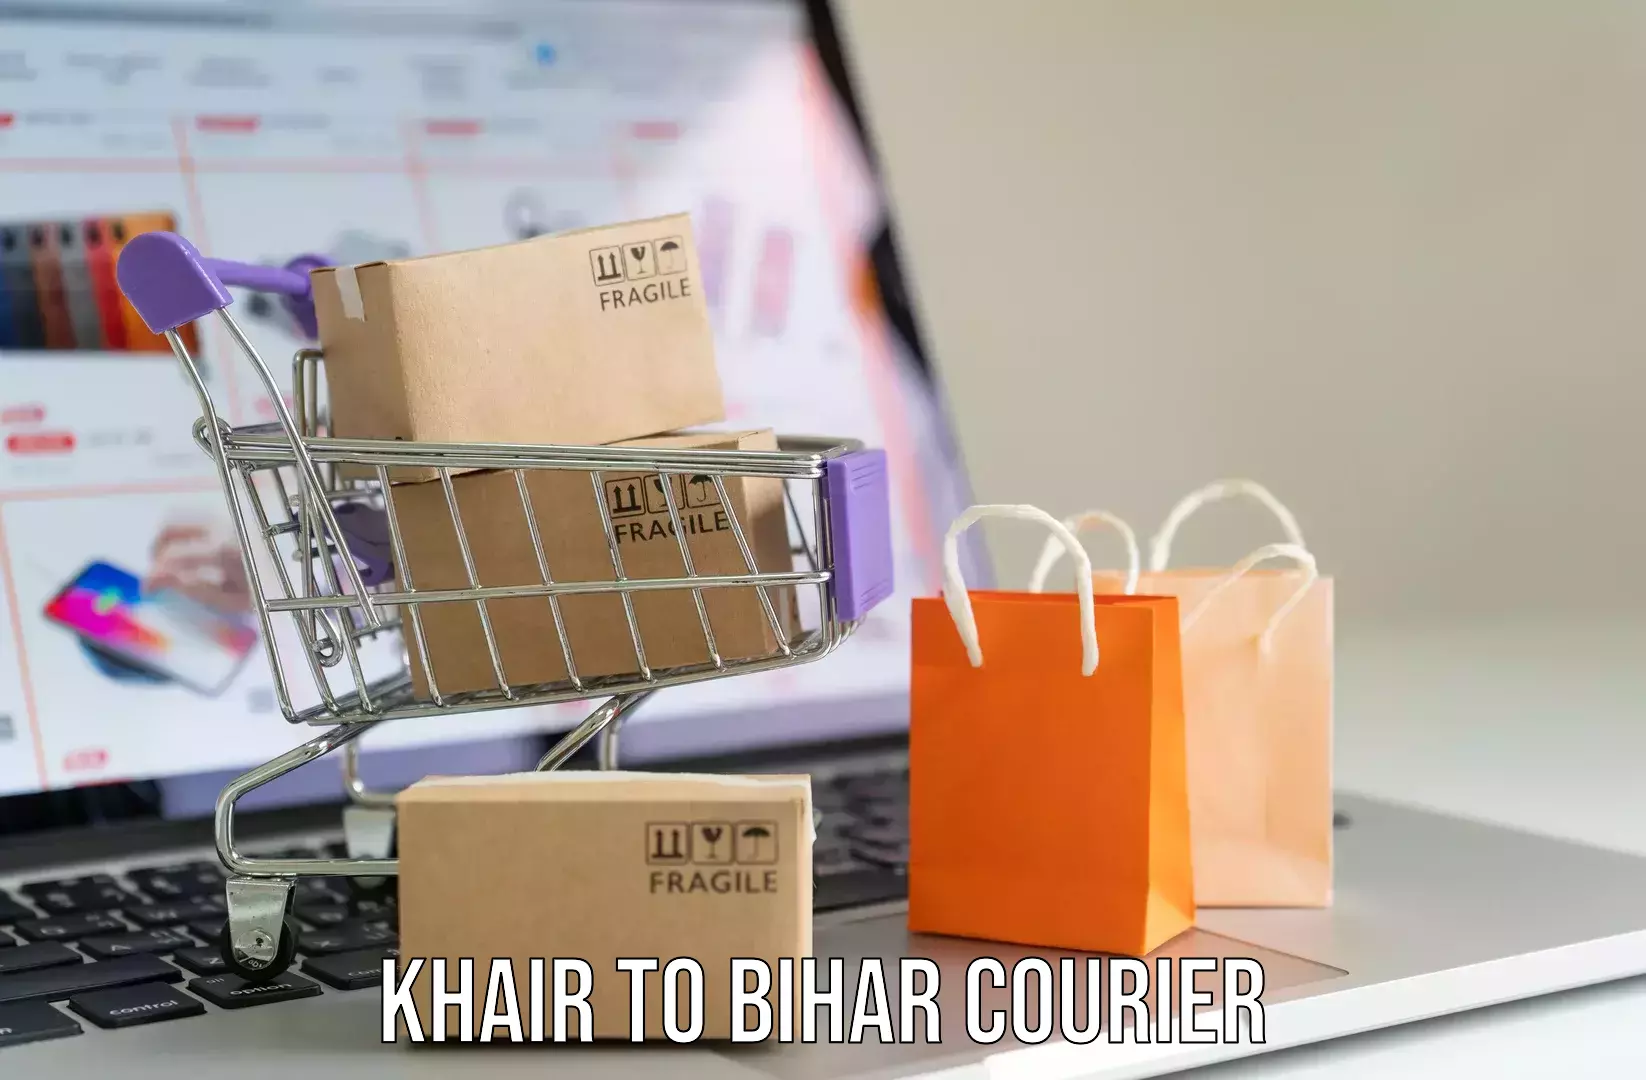 Same day luggage service Khair to Bihar